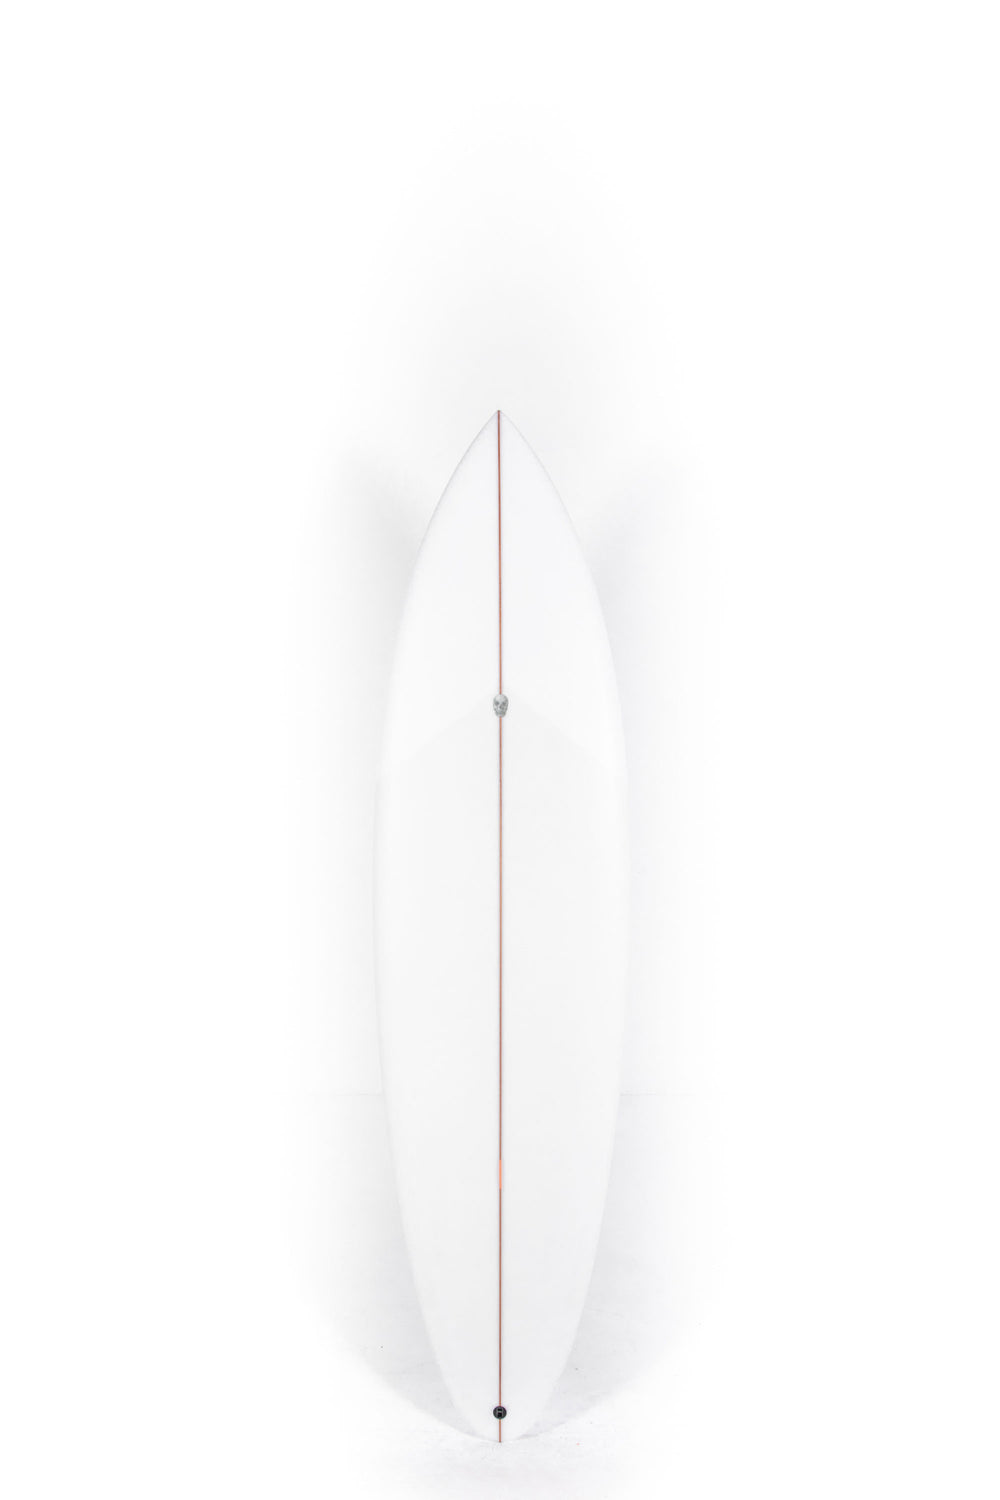 Pukas-Surf-Shop-Christenson-Surfboards-Osprey-Chris-Christenson-6_8